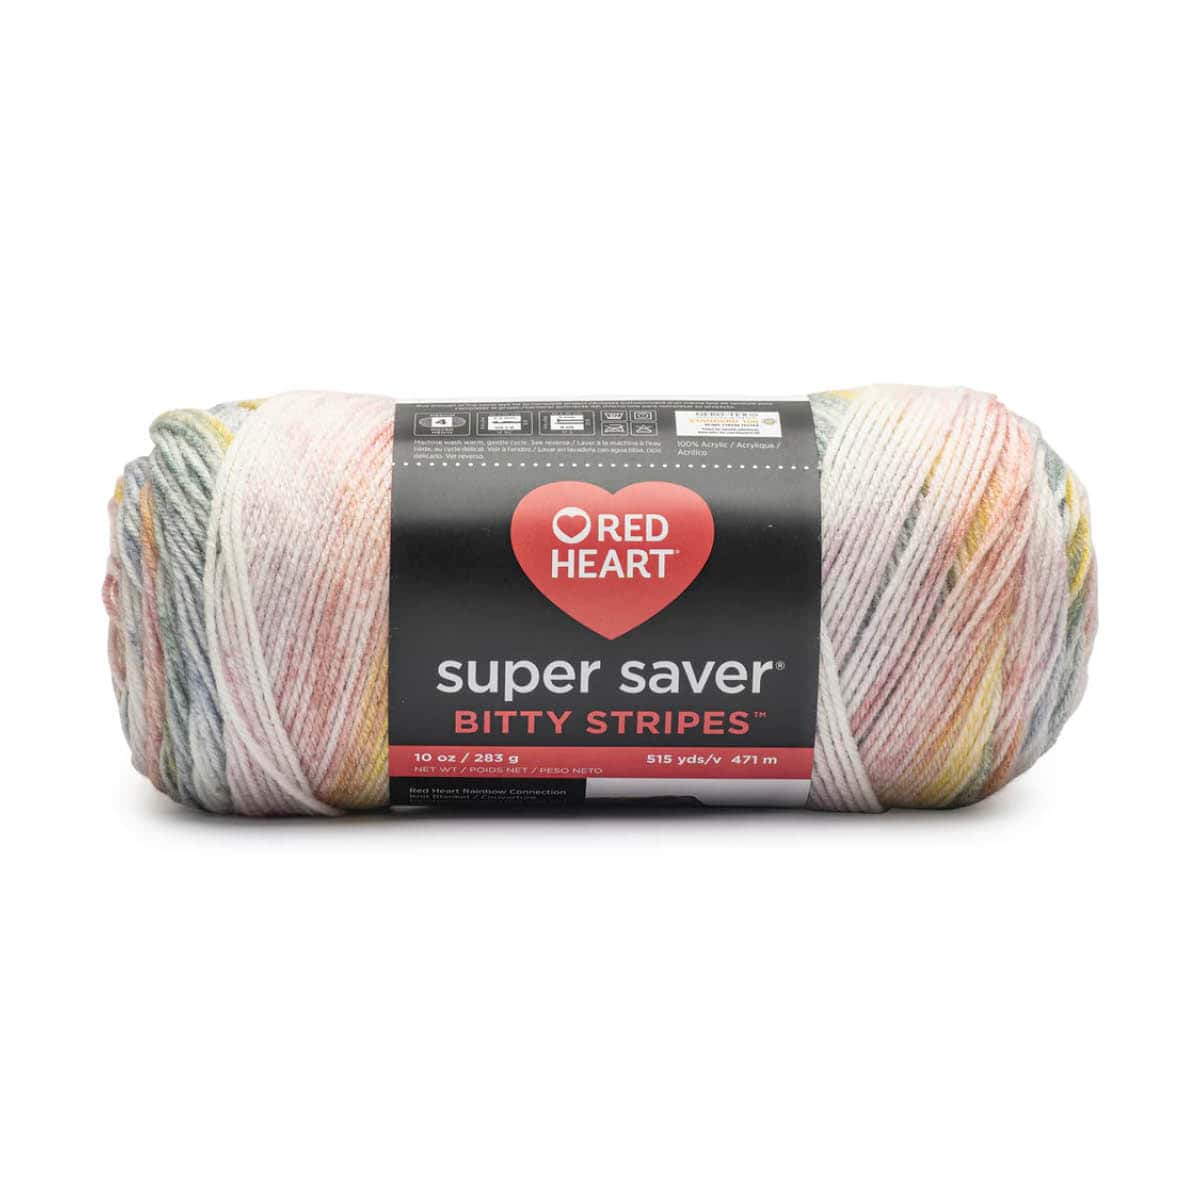 Crochet Super Saver Bitty Stripes Yarn Products